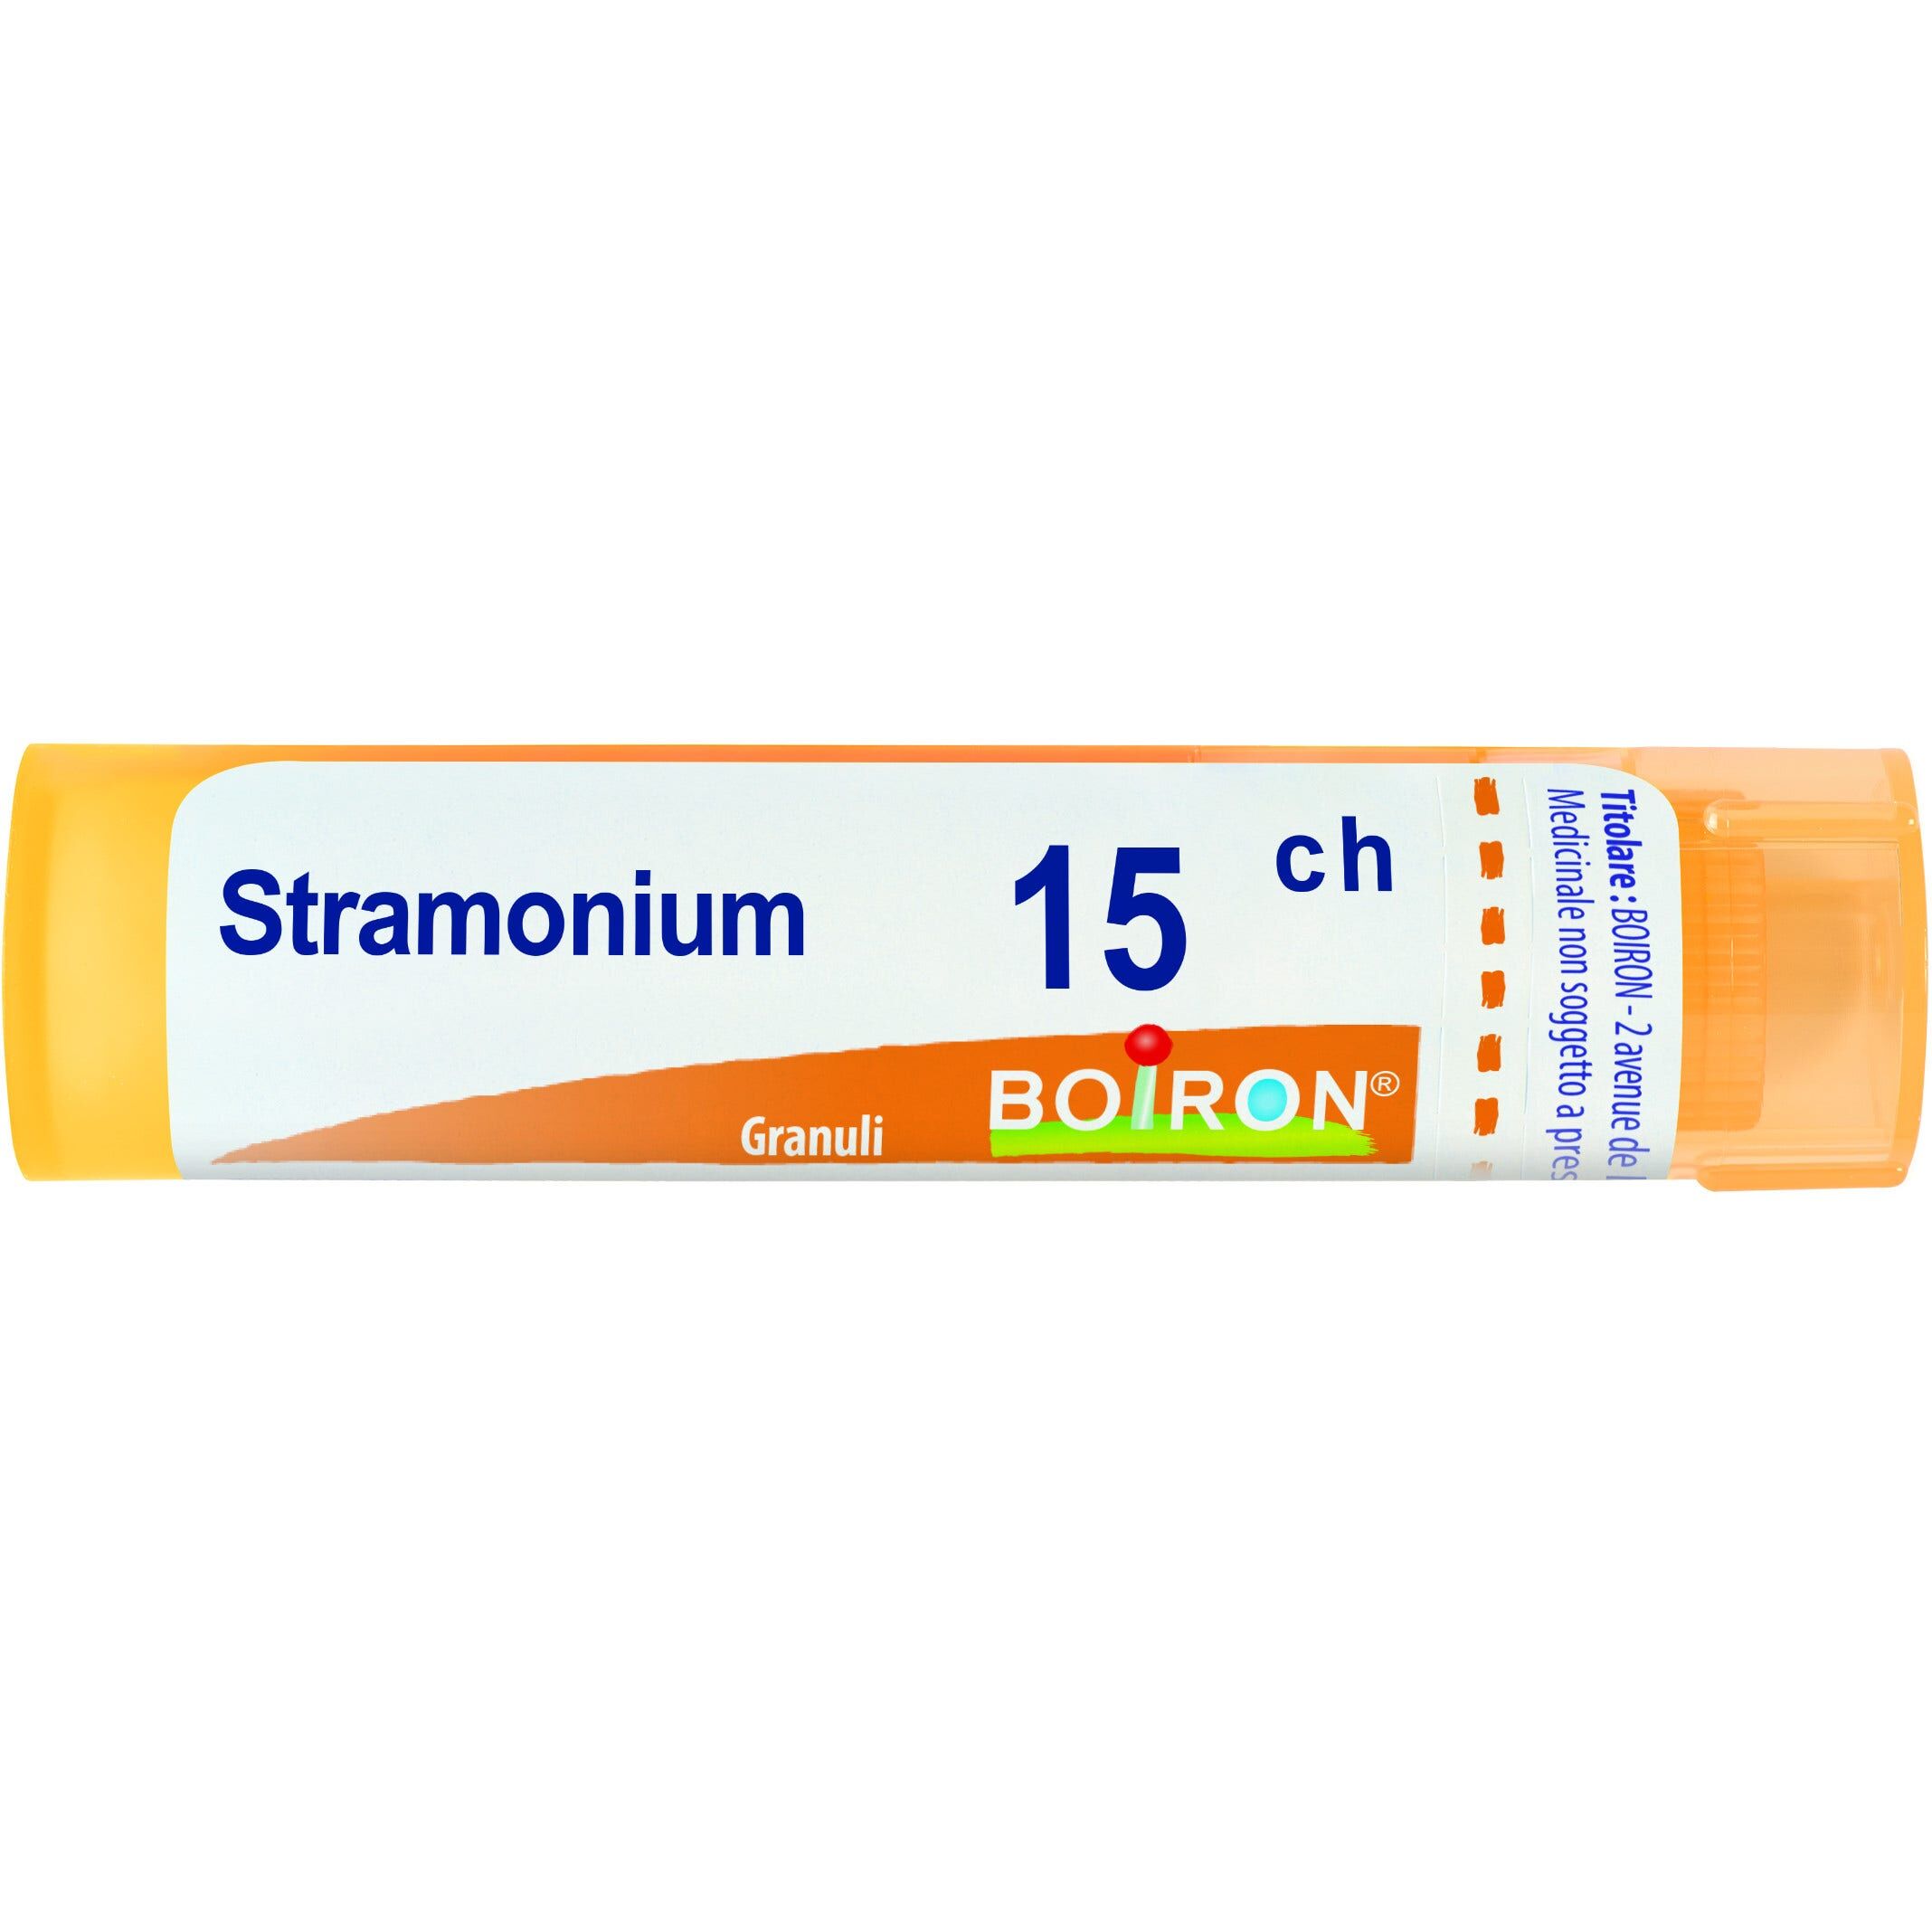 Boiron Stramonium 15 Ch 80 Gr 4 G